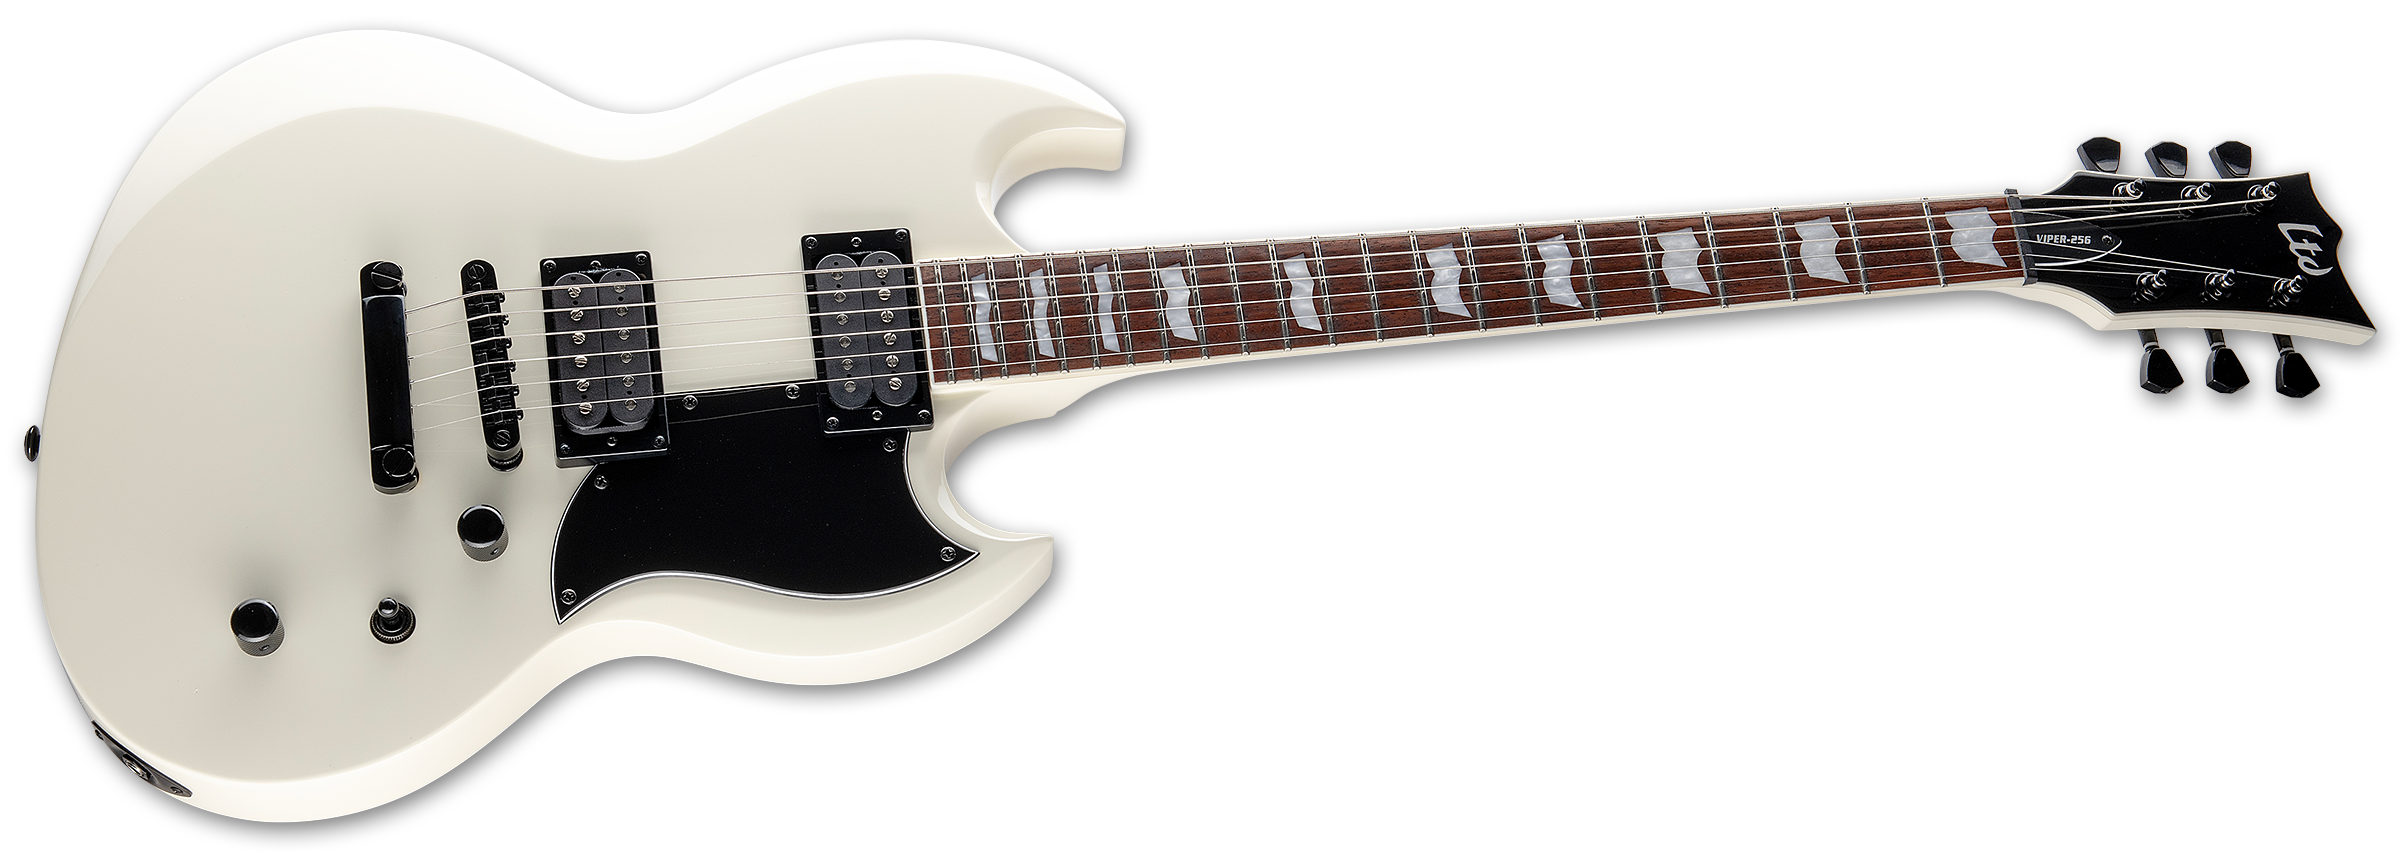 Ltd Viper-256 Hh Jat - Olympic White - Metalen elektrische gitaar - Variation 2